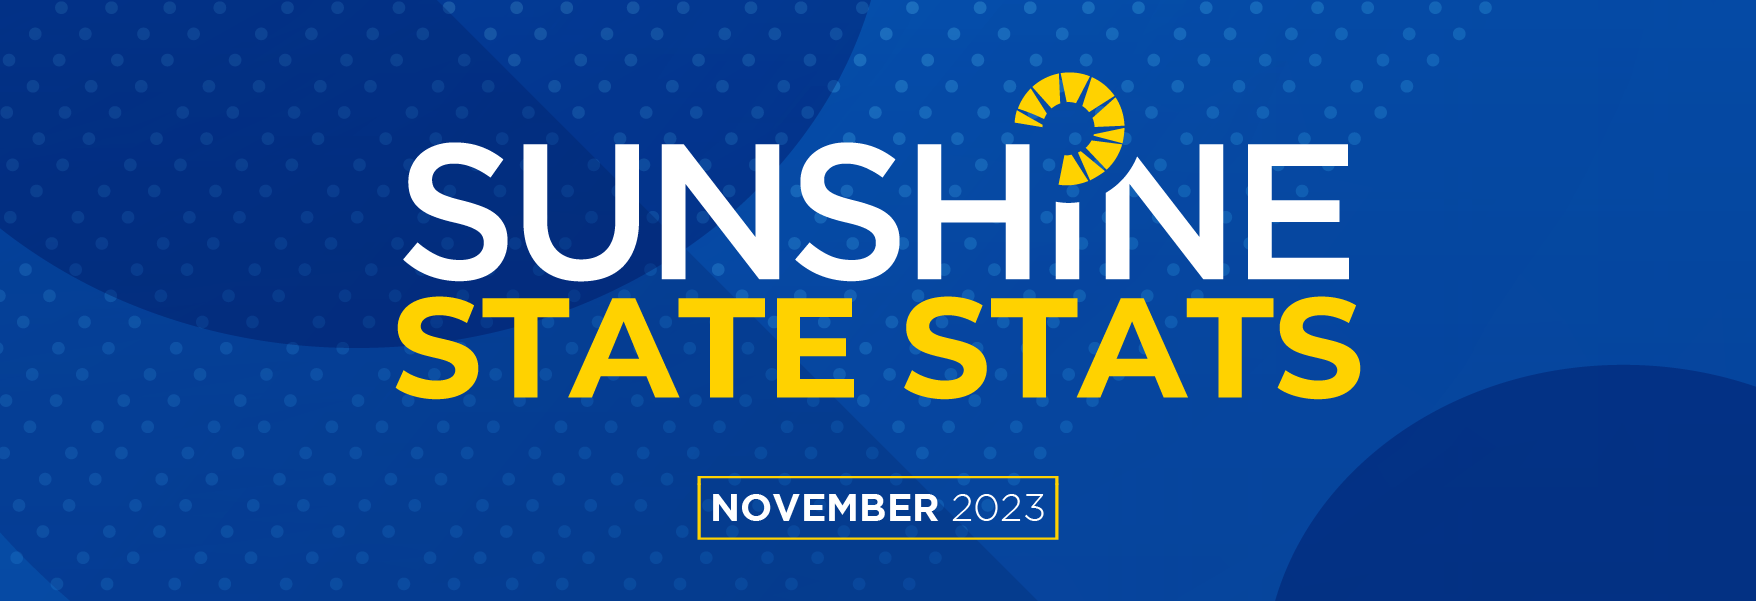 November 2023 Sunshine State Stats